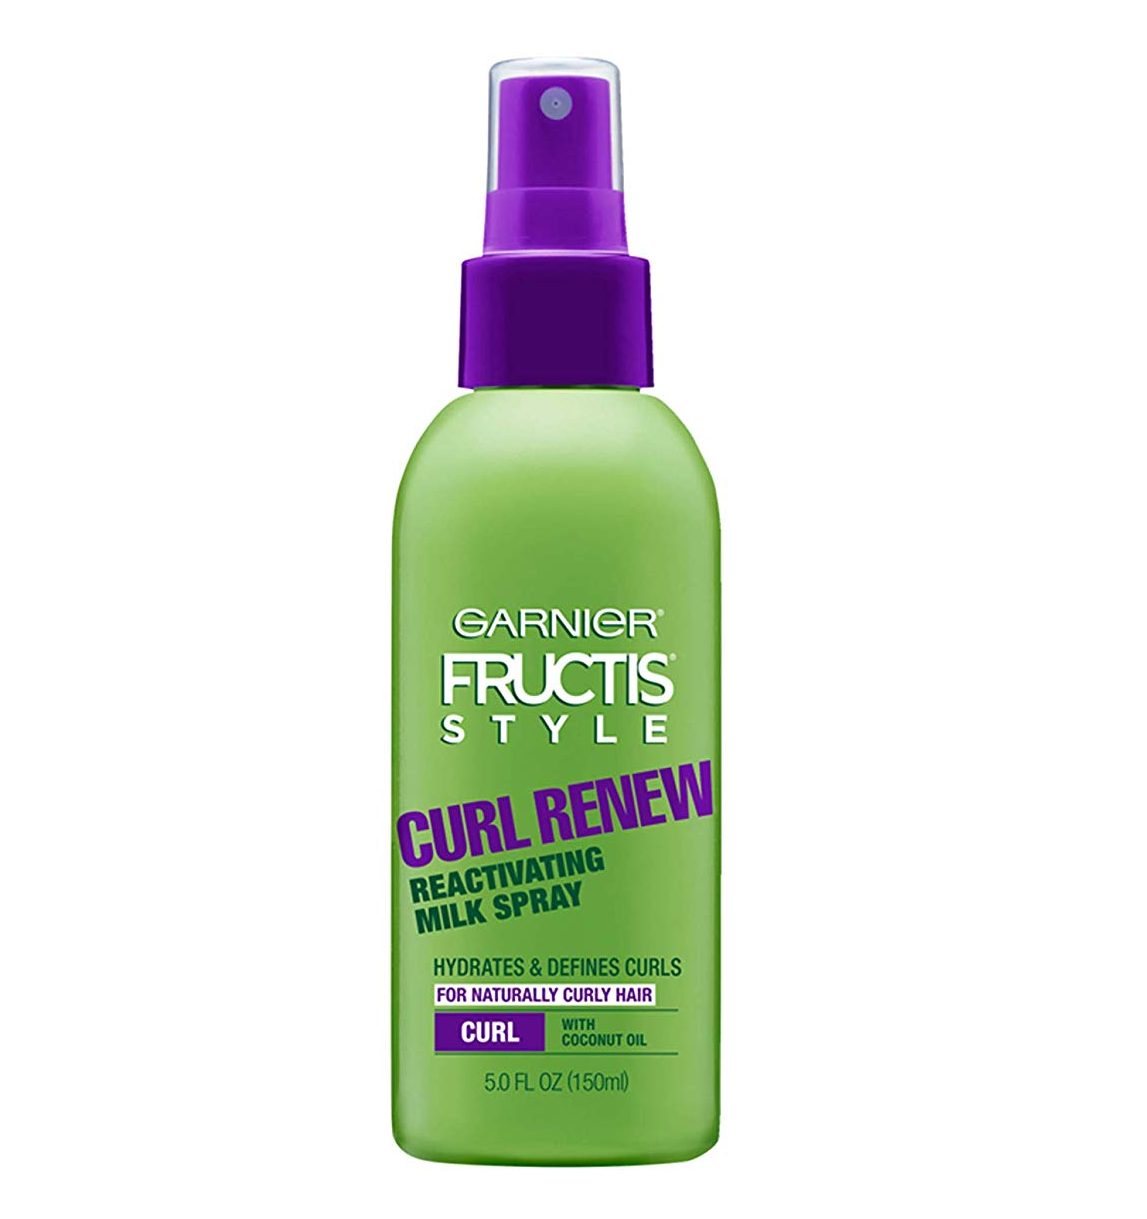 Garnier Fructis Style Curl Renew Reactivating Milk Spray For Curly Hair, 5 oz